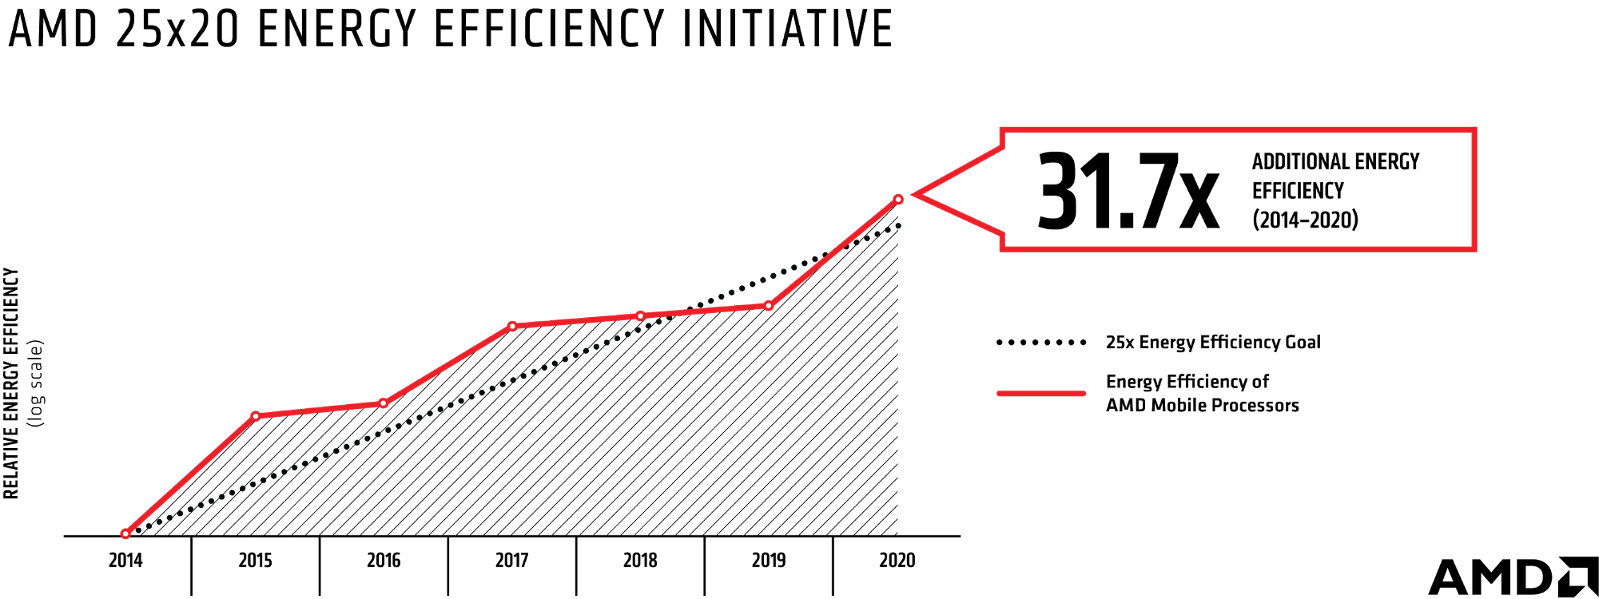 448058 update 25x20 graph final v5 AMD บรรลุความสำเร็จเหนือเป้าหมายที่ตั้งไว้ใน 6 ปี ในการพัฒนาประสิทธิภาพการใช้พลังงานของโมบายโปรเซสเซอร์ที่เพิ่มขึ้นกว่า 25 เท่า